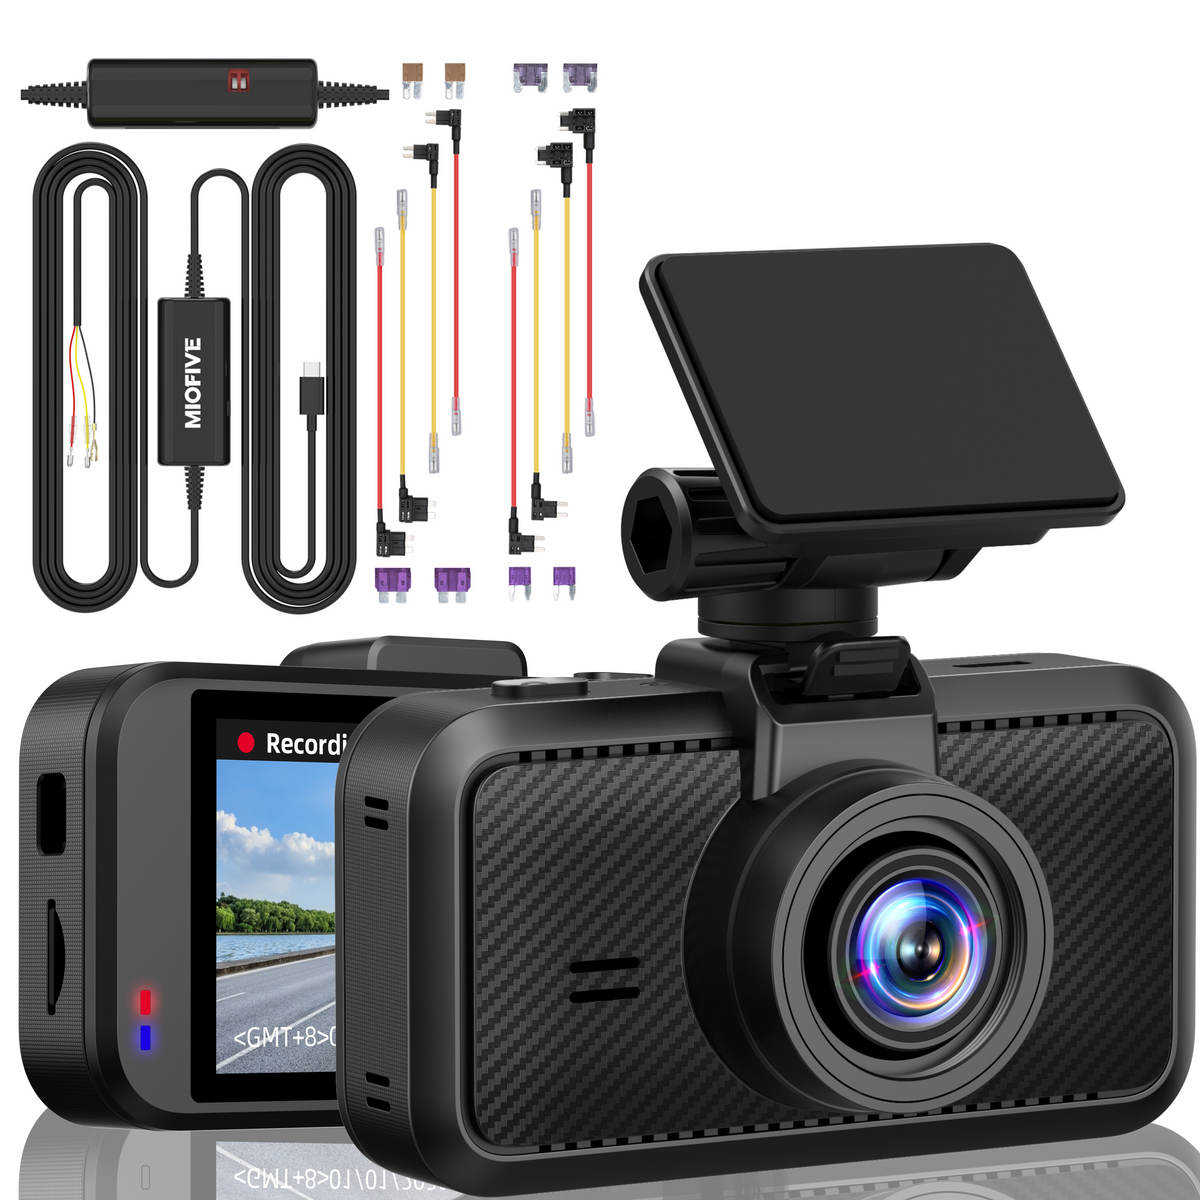 Miofive S1-4K Dash Cam, Built-in 5G WiFi GPS & Bluetooth Pairing Car Dashboard Camera Recorder + Upgraded 11.5ft USB Type-C Port Dash Cam Hardwire Kit（BUNDLE-S1+HWK2）